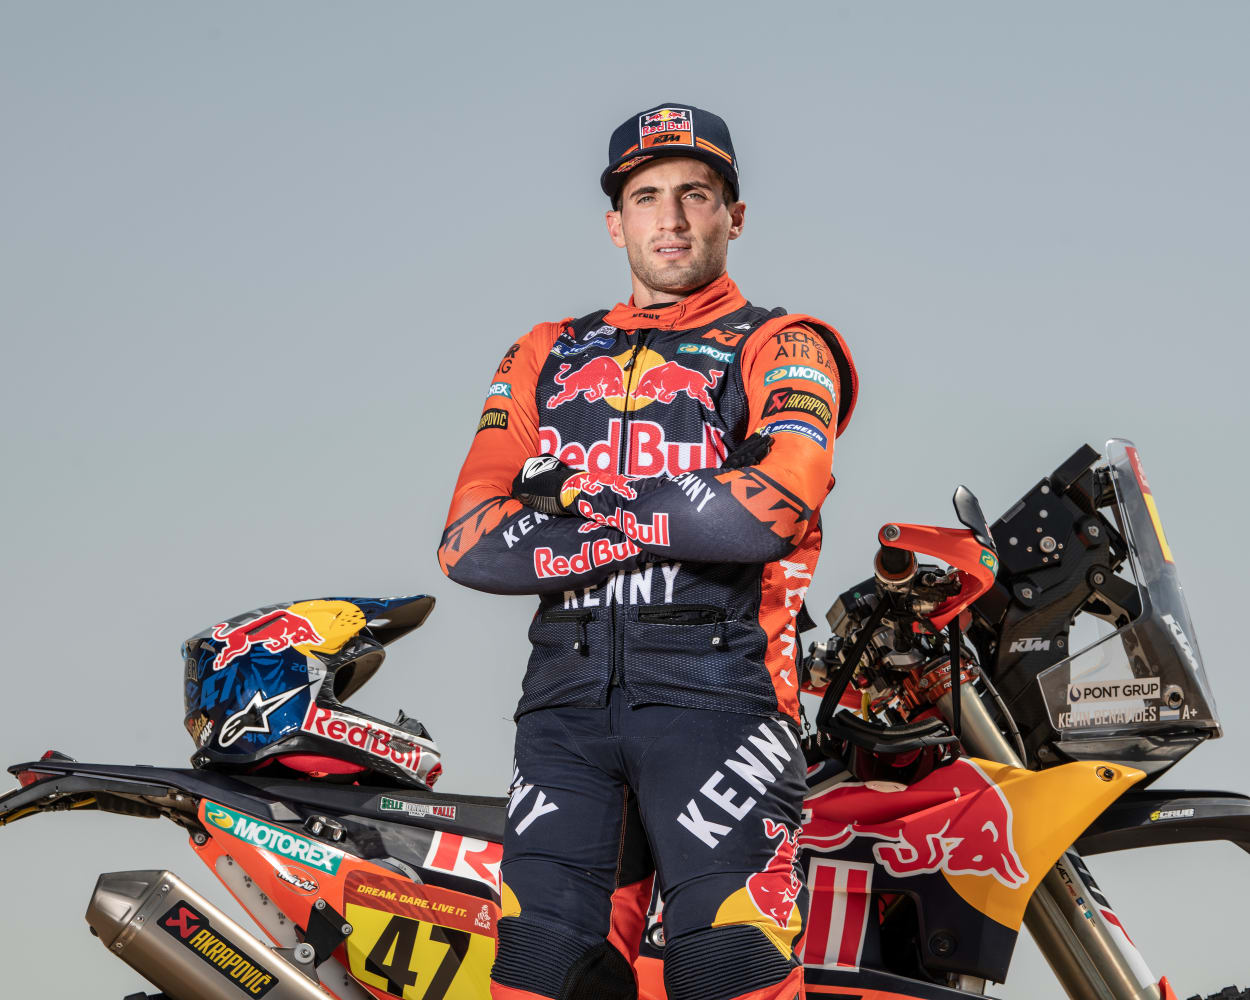 Kevin Benavides: Rally-raid bike – Red Bull Athlete